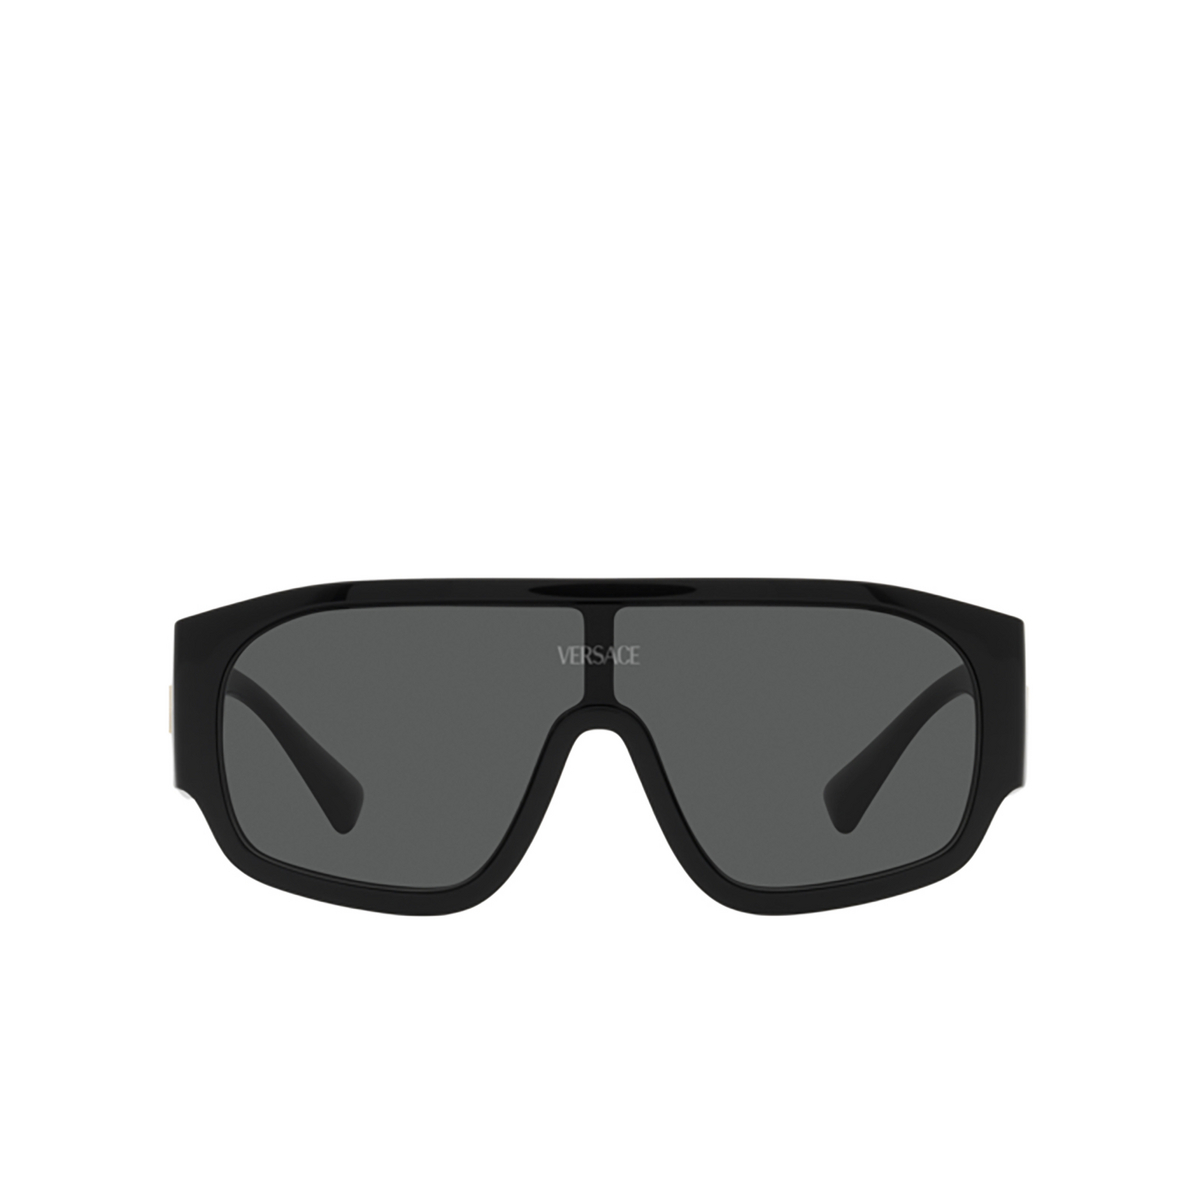 Versace VE4439 Sunglasses GB1/87 Black - front view